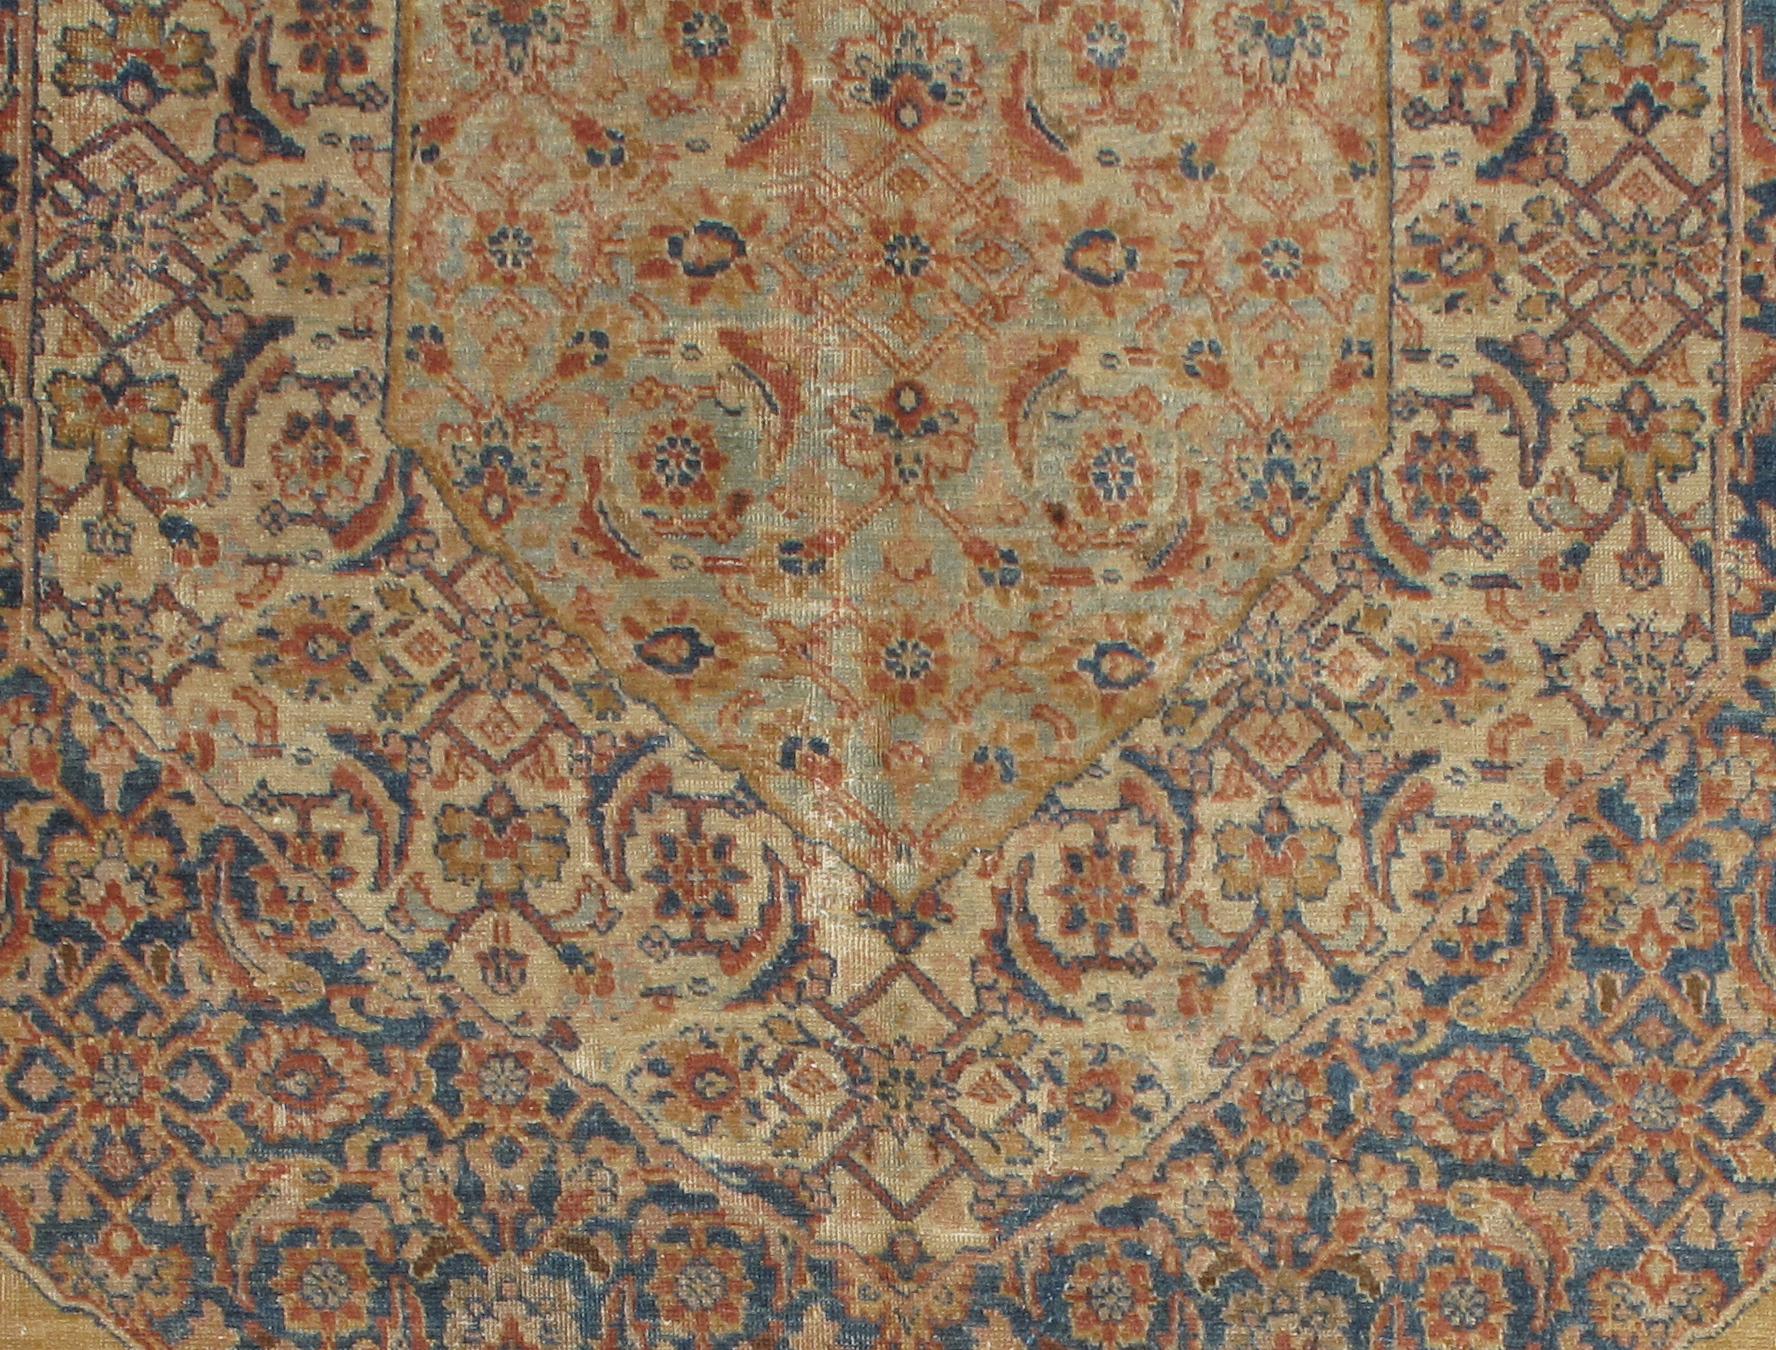 Antique Tabriz Carpet, Persian Rug, Earth Tones, Ivory, Soft Colors For Sale 6